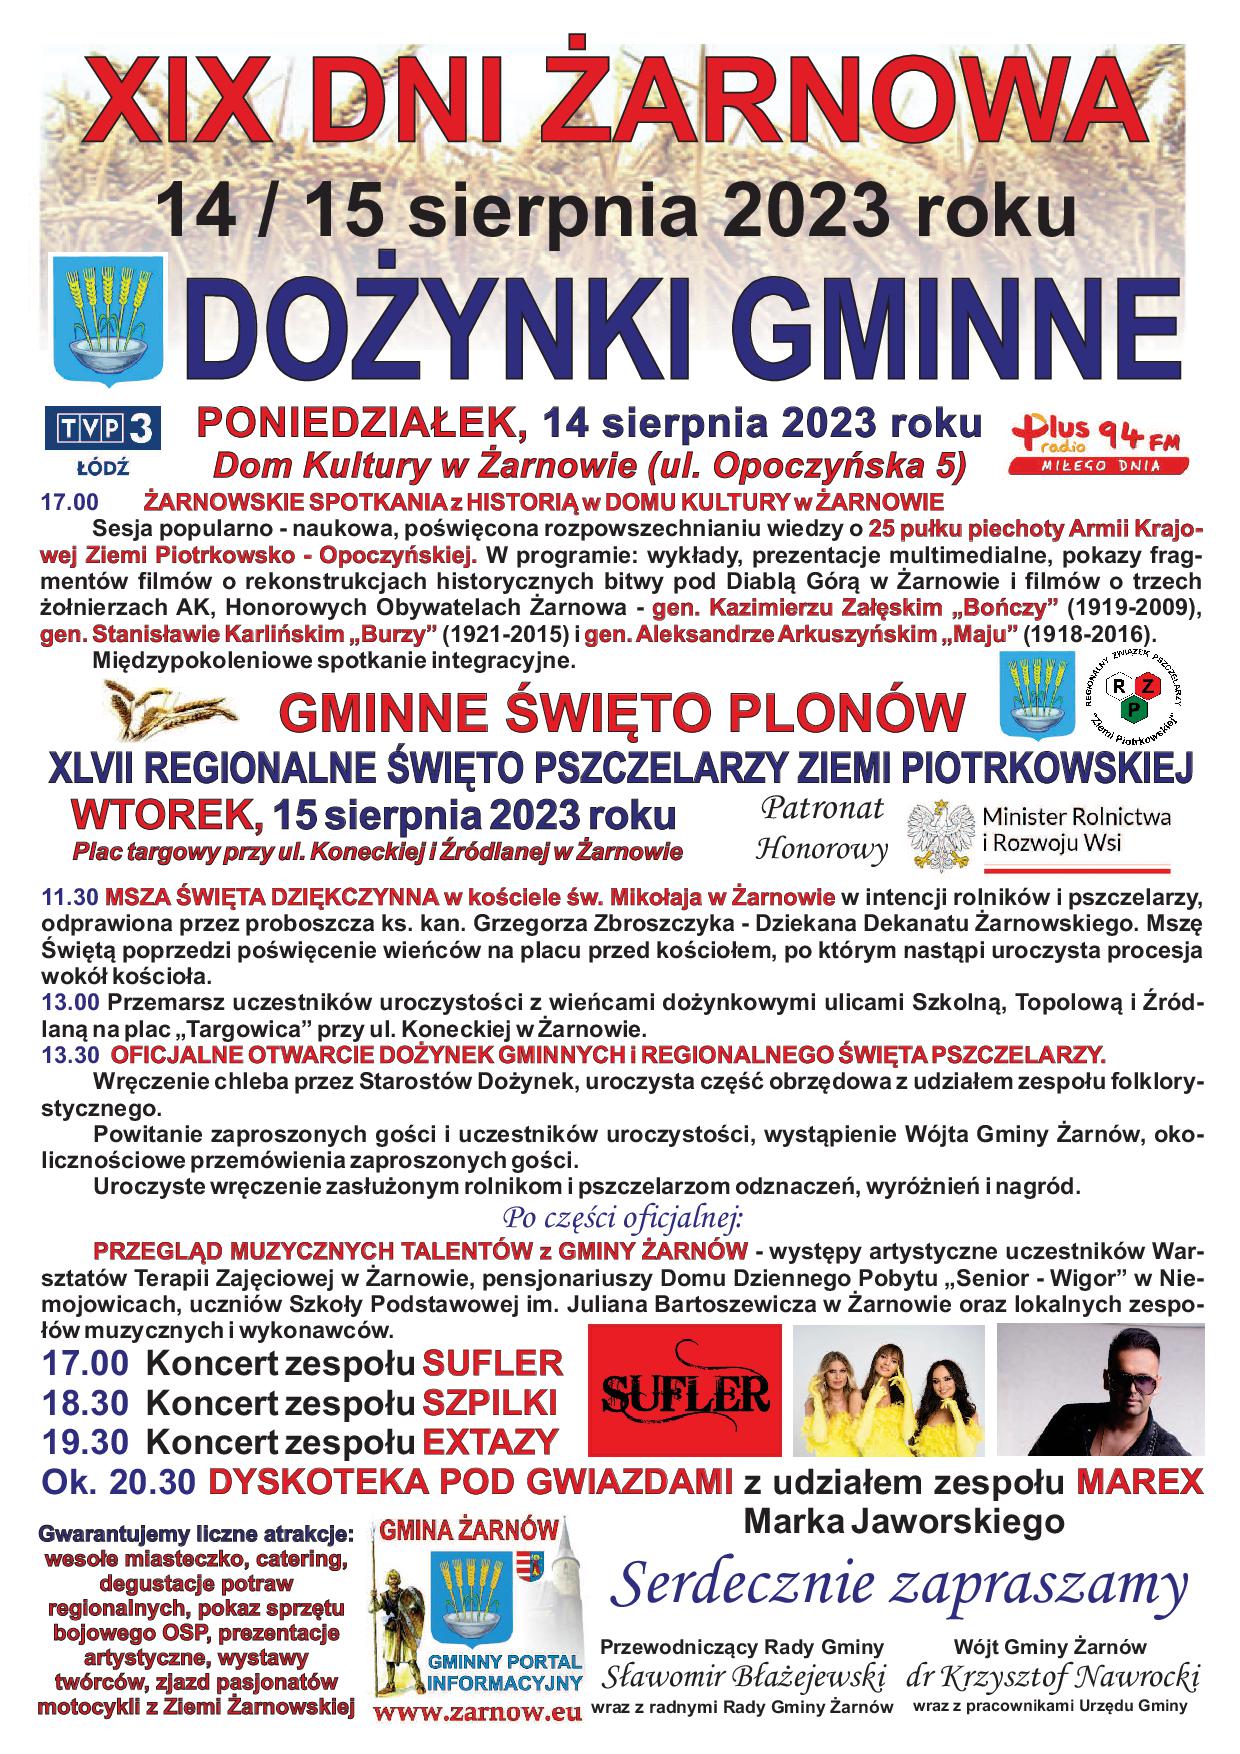 Plakat XIX Dni Żarnowa 2023